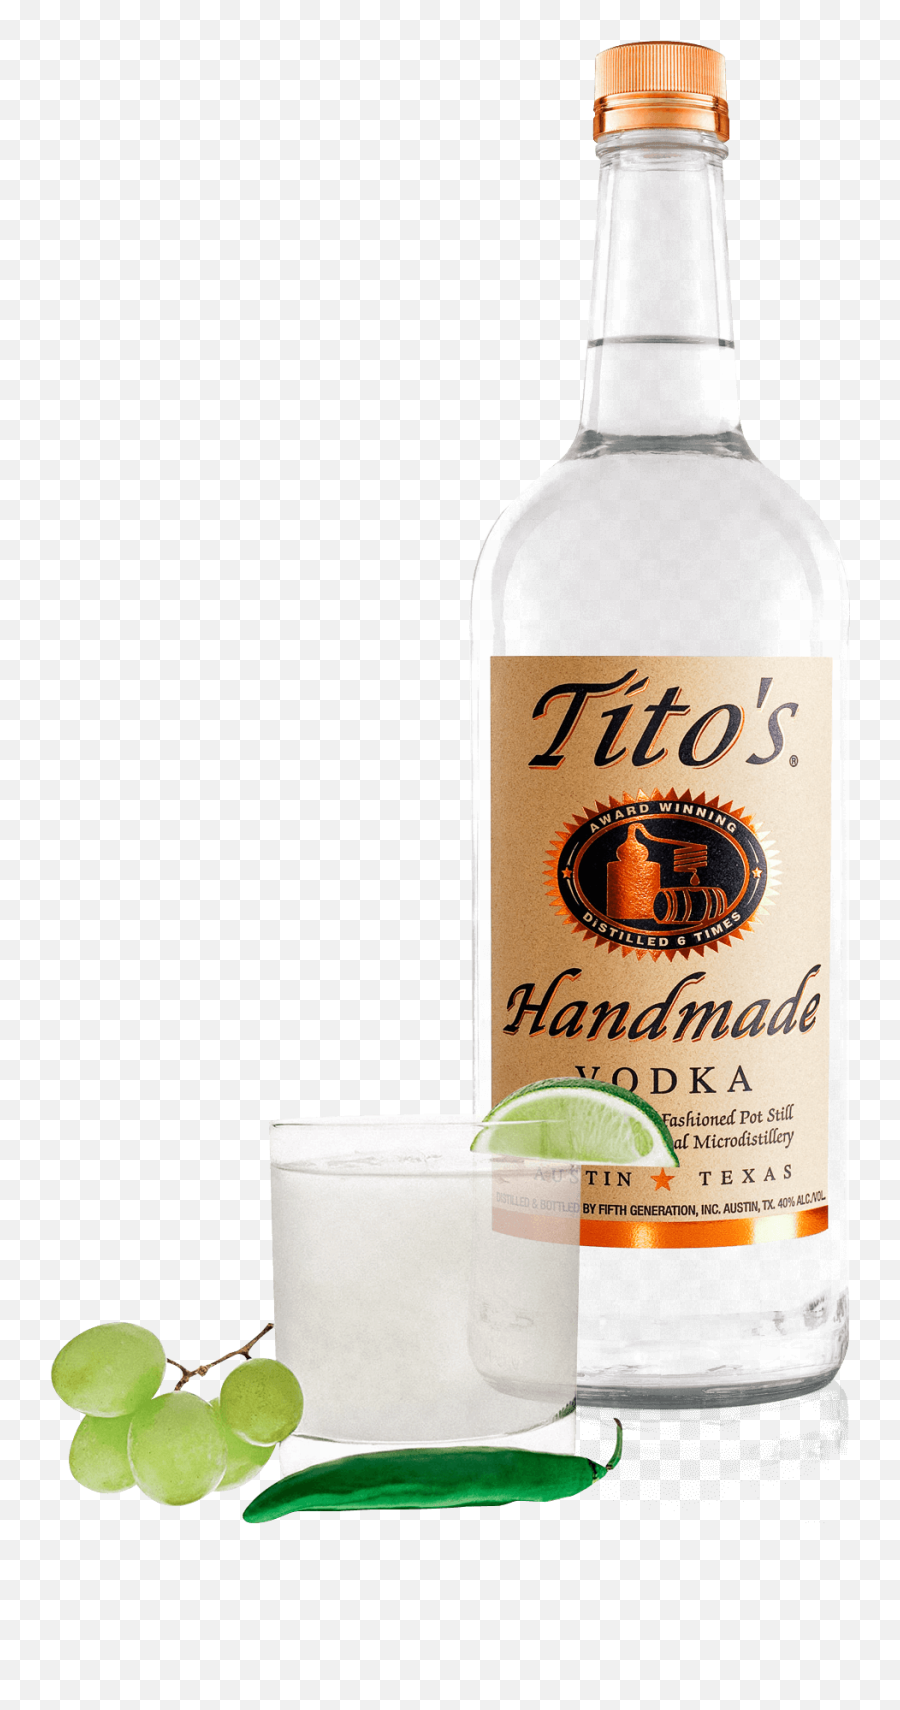 Hd Png Download - Handmade Vodka,Tito's Vodka Logo Png